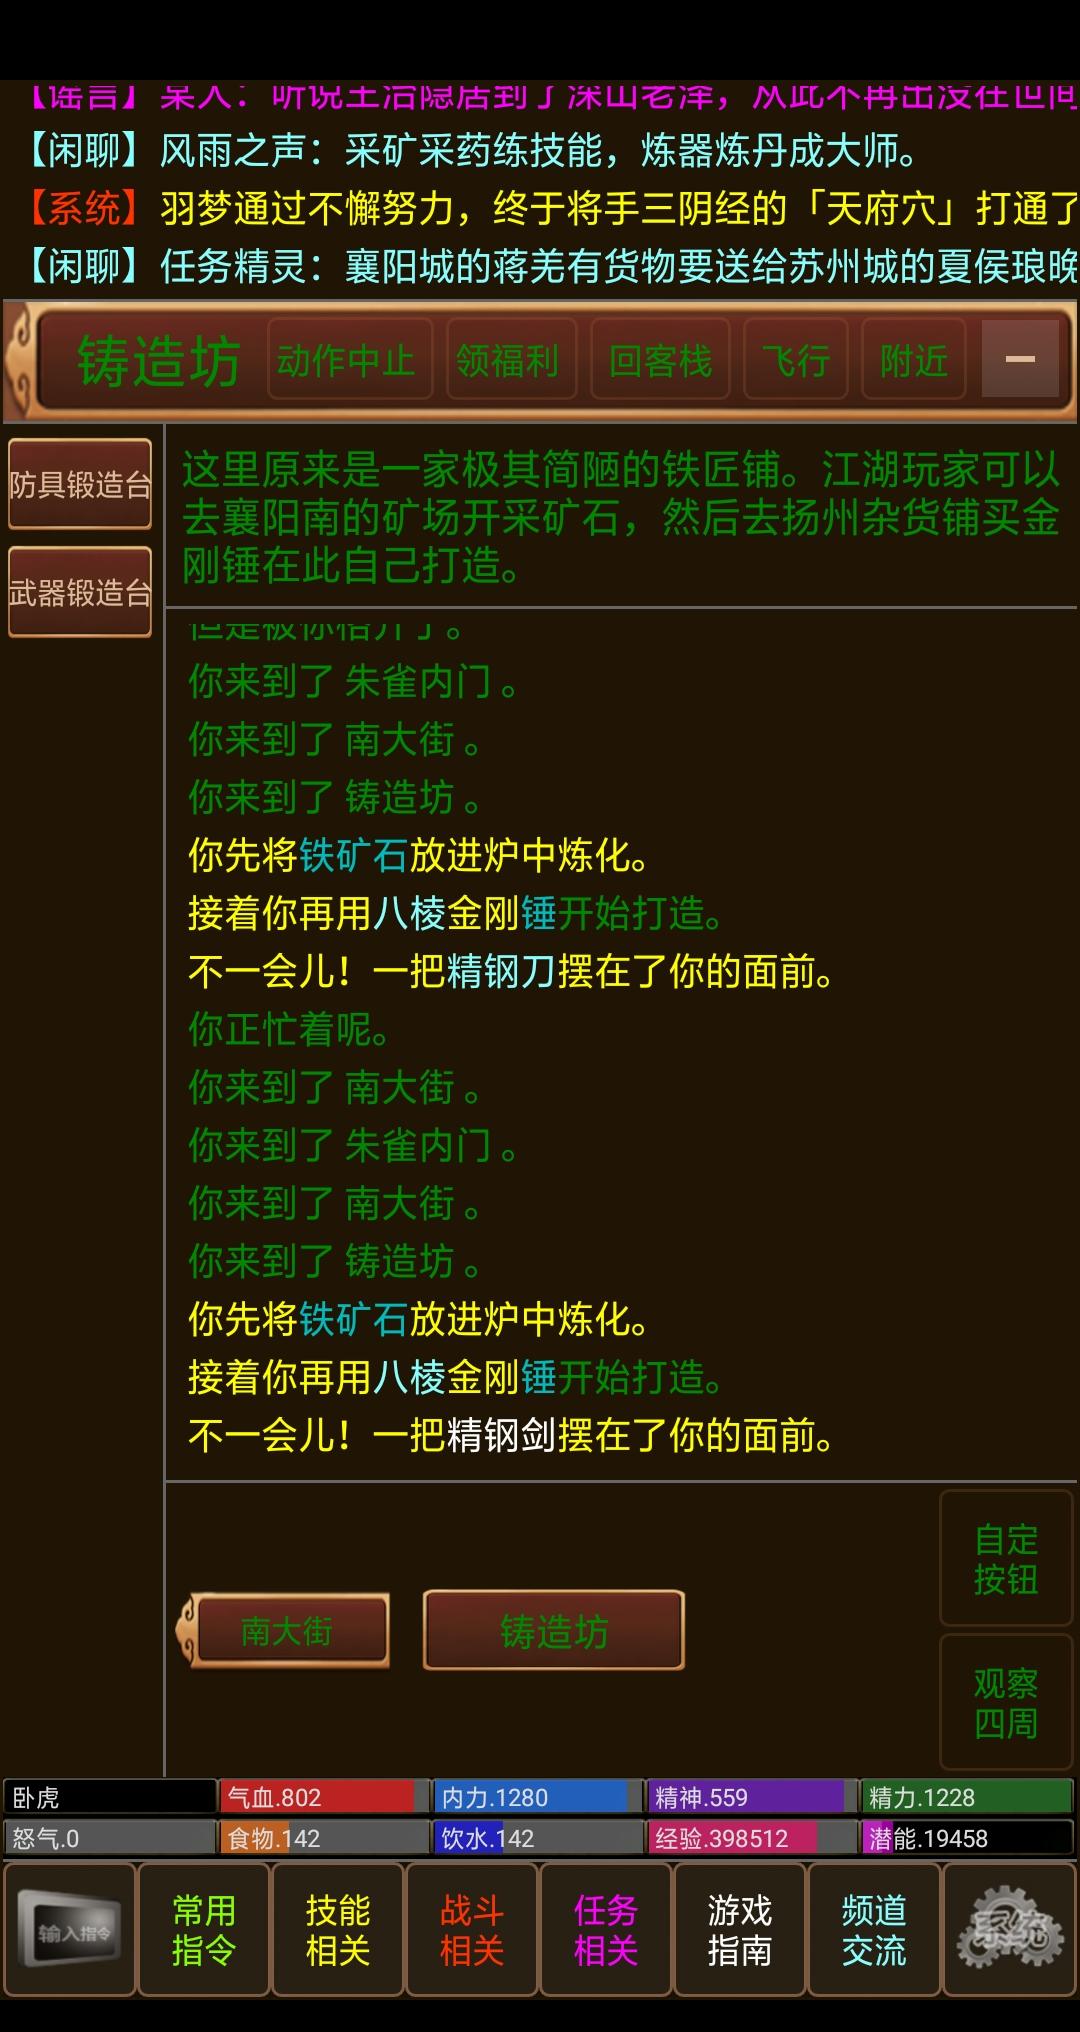 Screenshot 1 of Jiangshan hangin at ulan 2.1.0